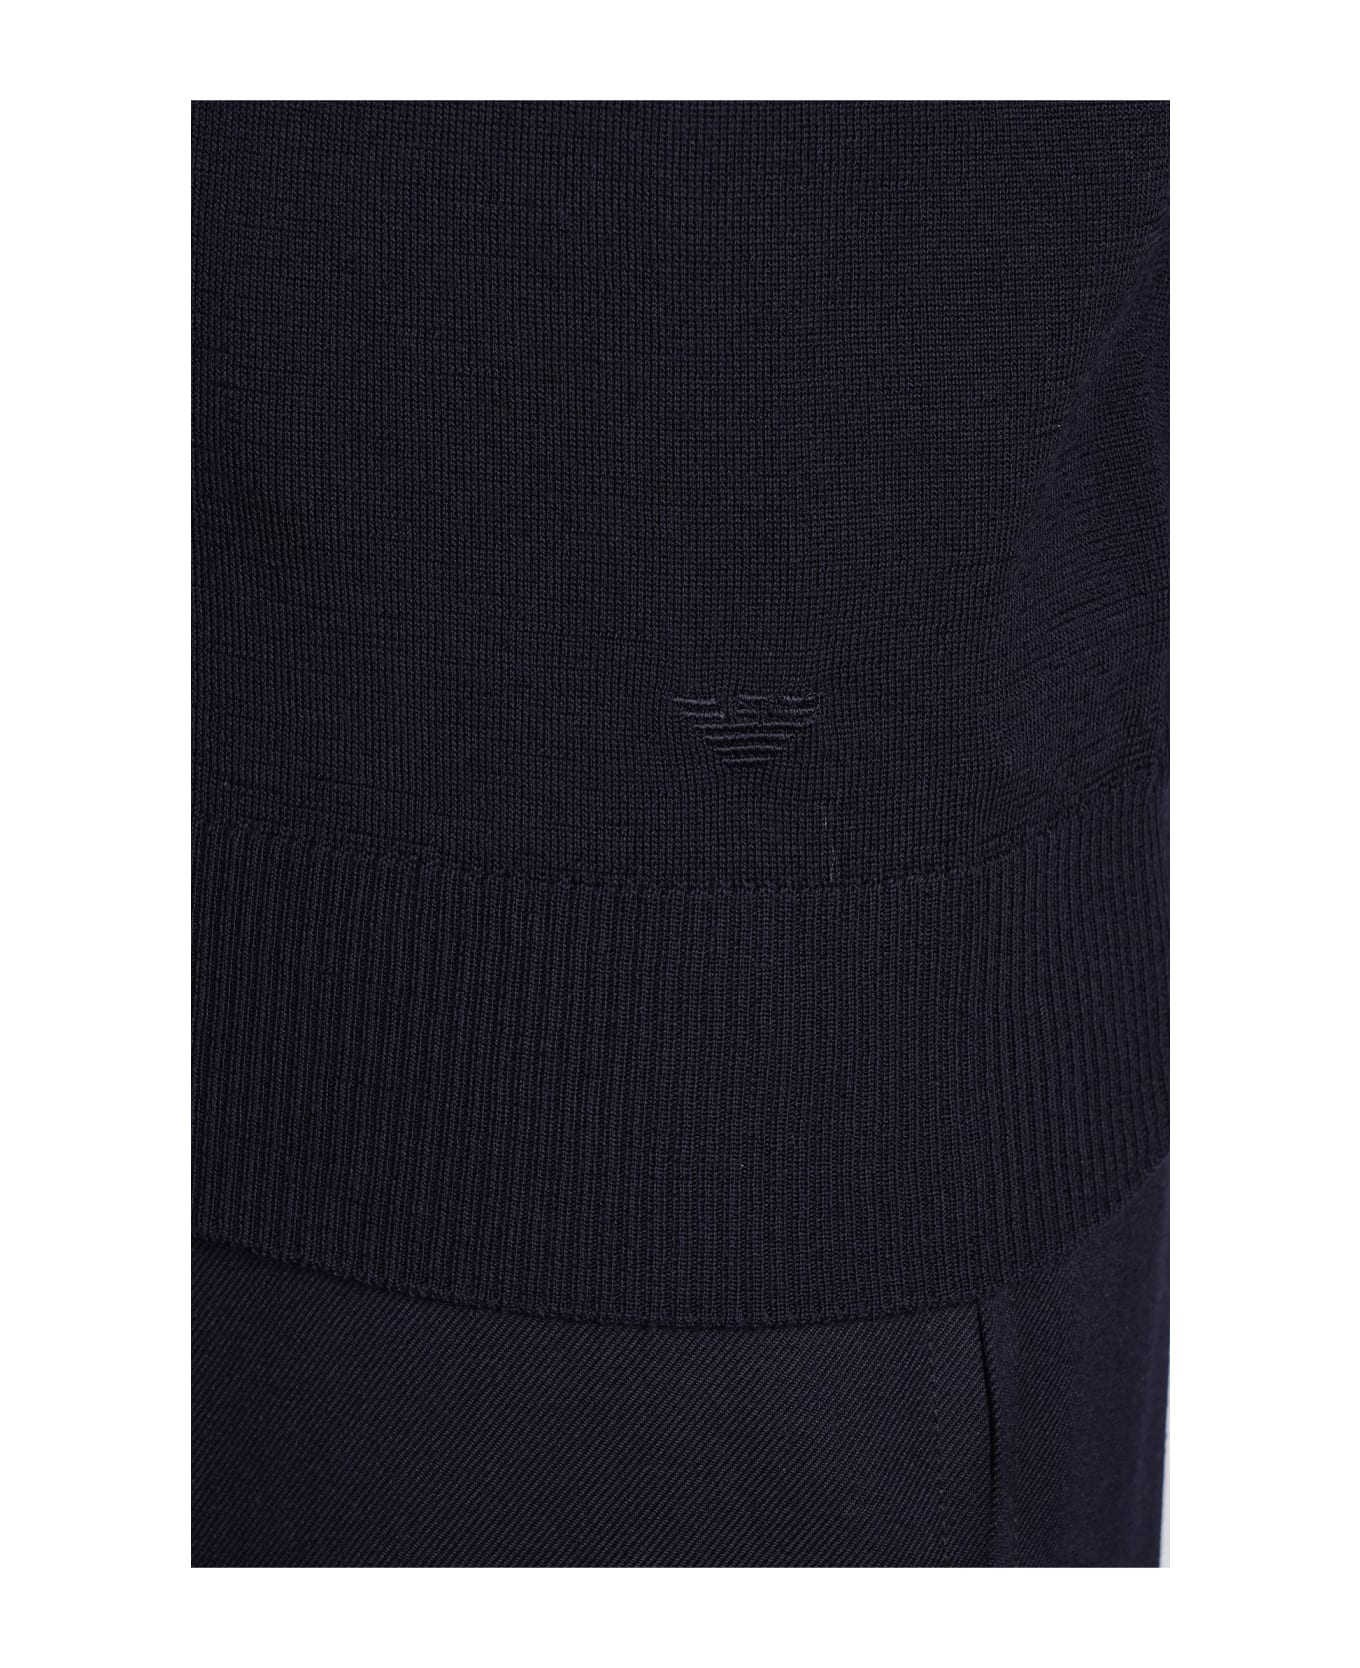 Emporio Armani Knitwear In Blue Wool - Blu navy フリース